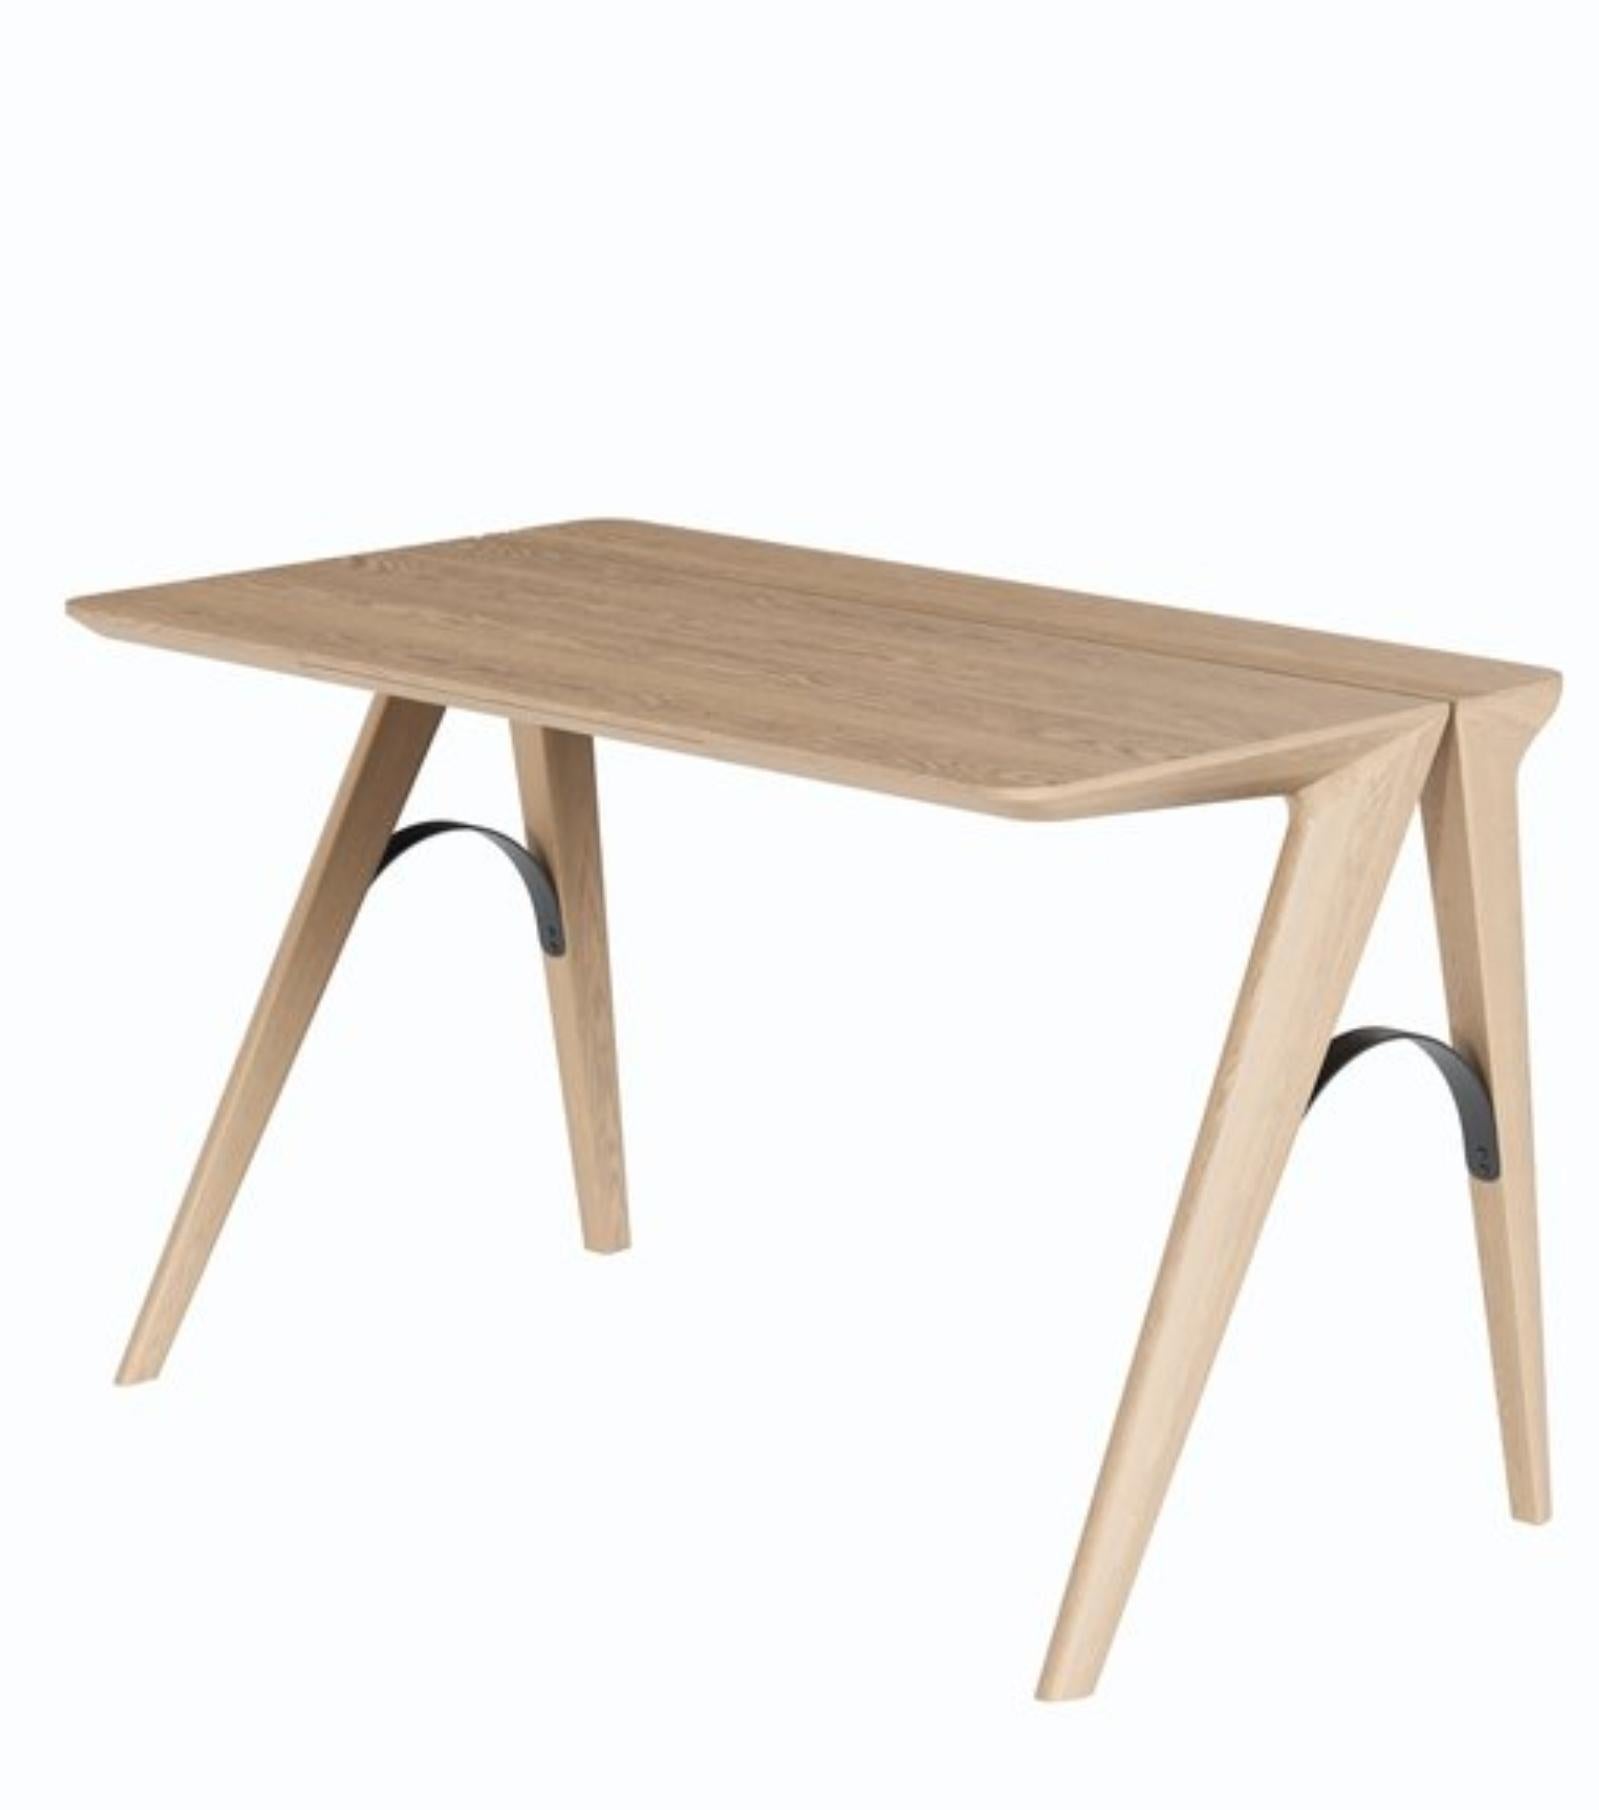 Portuguese Scandinavian Minimalist Style Wood Desk For Sale